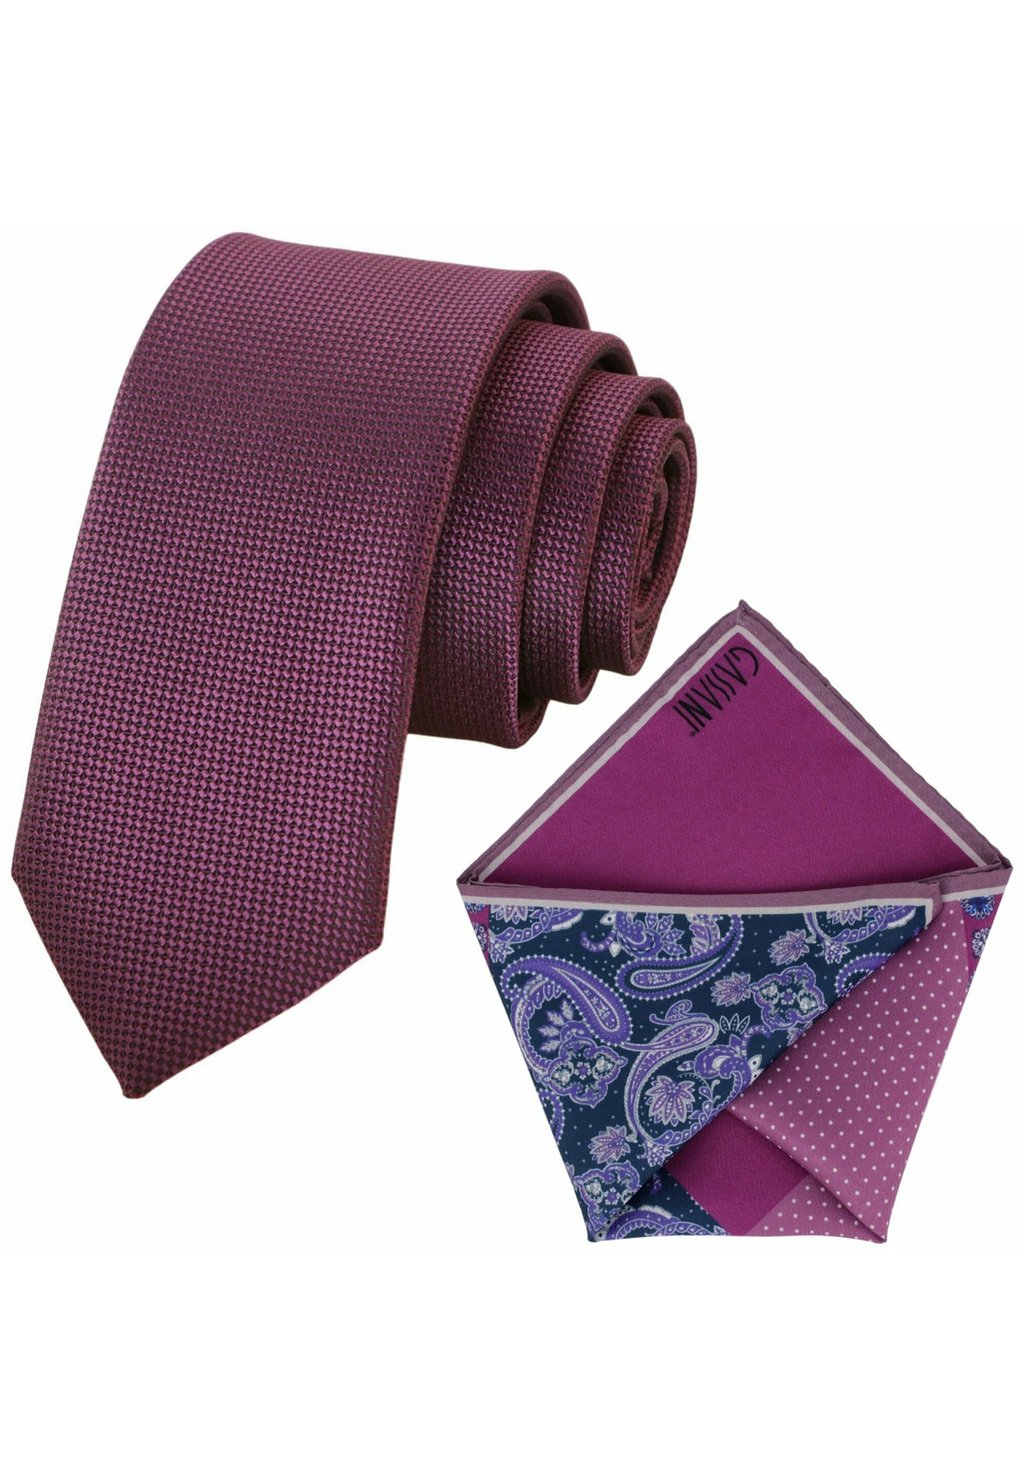 Нагрудный платок 2 SET DON SLIM KRAWATTE & 4 DESIGN PAISLEY EINSTECKTUCH Gassani, цвет bordeaux violett fuchsia | stahl-blau lila paisley & punkte